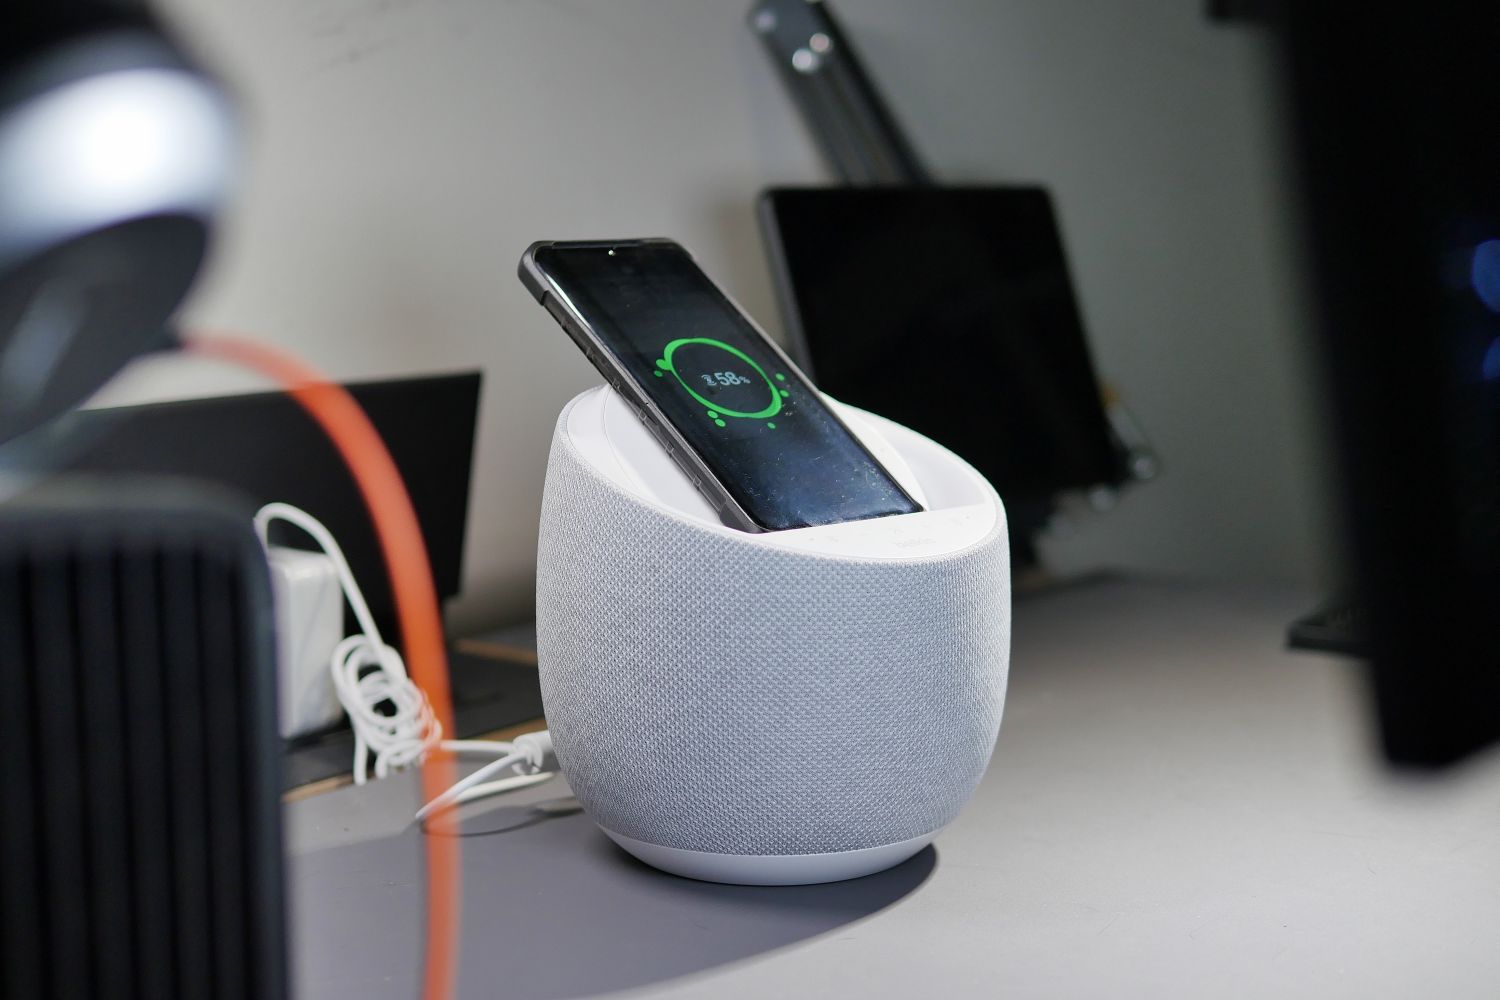 Belkin SoundForm Elite Hi-Fi Review: A Speaker with Utility